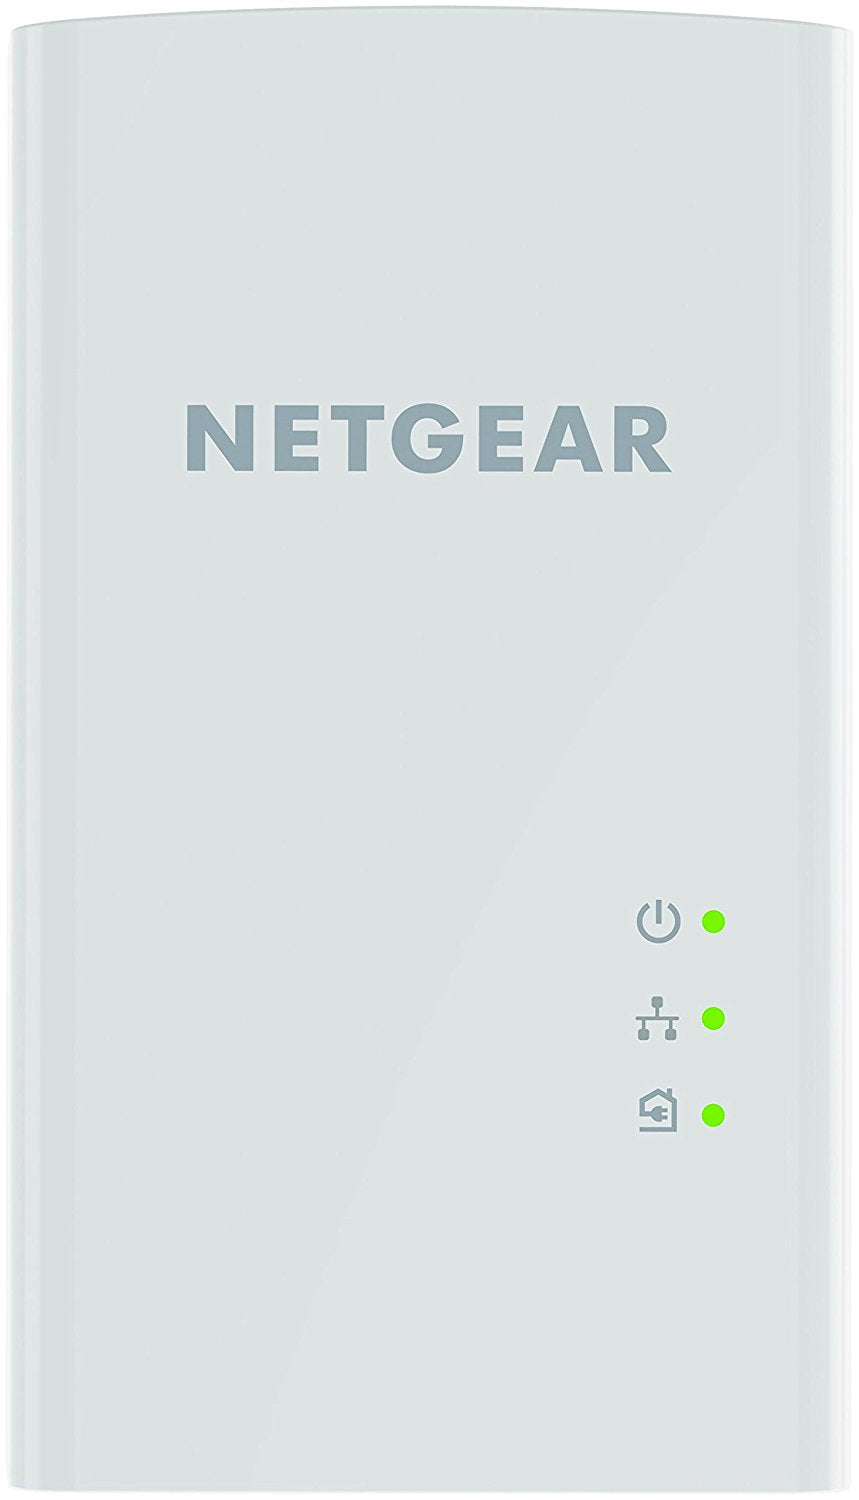 NETGEAR  Powerline Gigabit Ethernet Adapters - 2 Pack